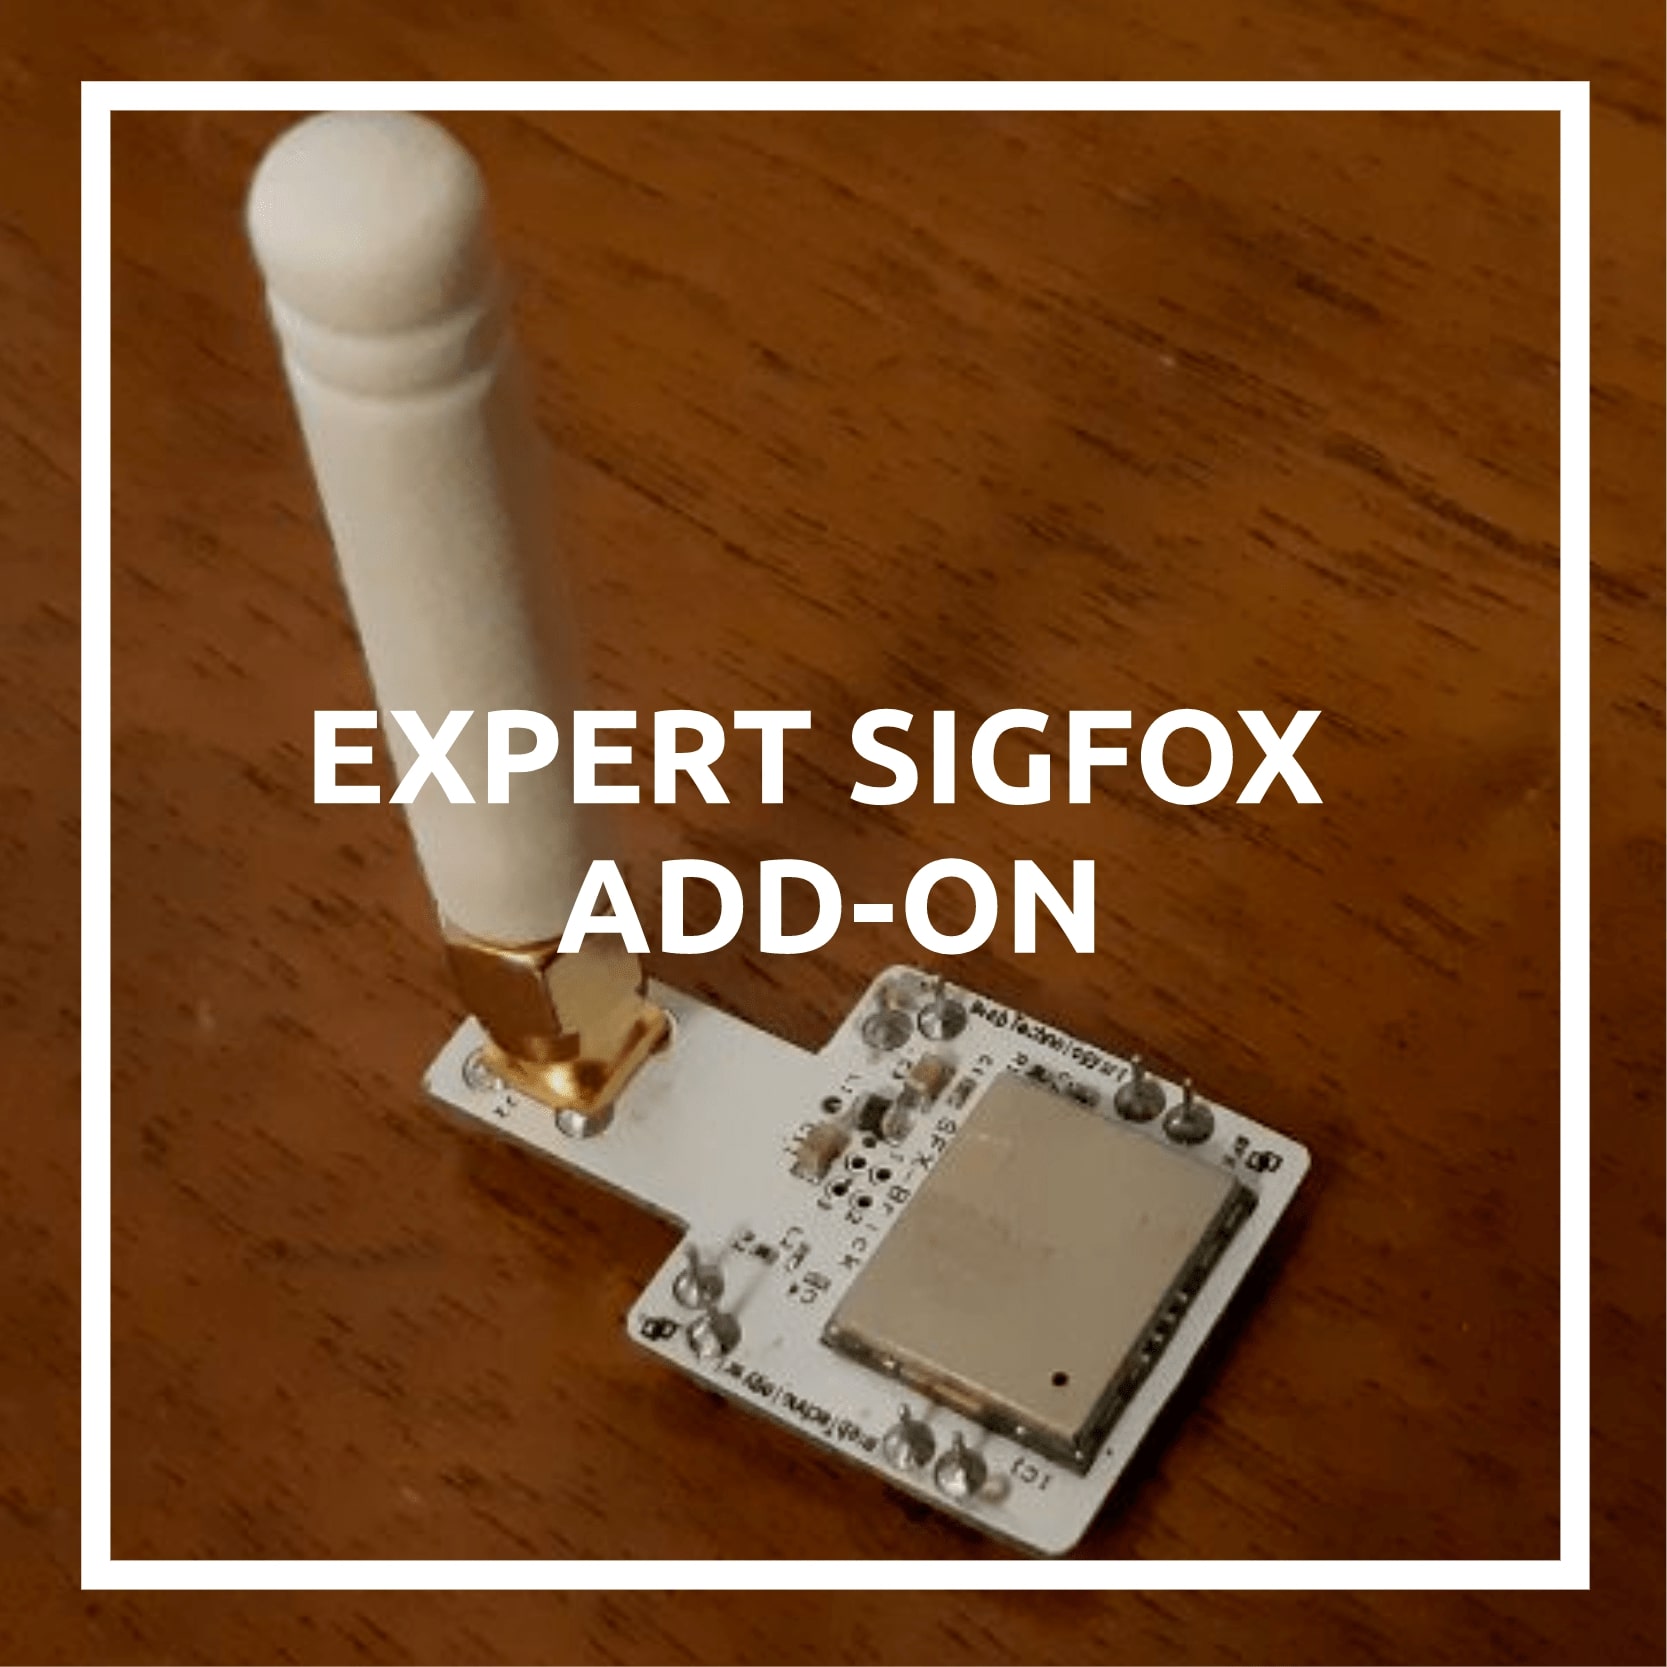 Expert Sigfox Add